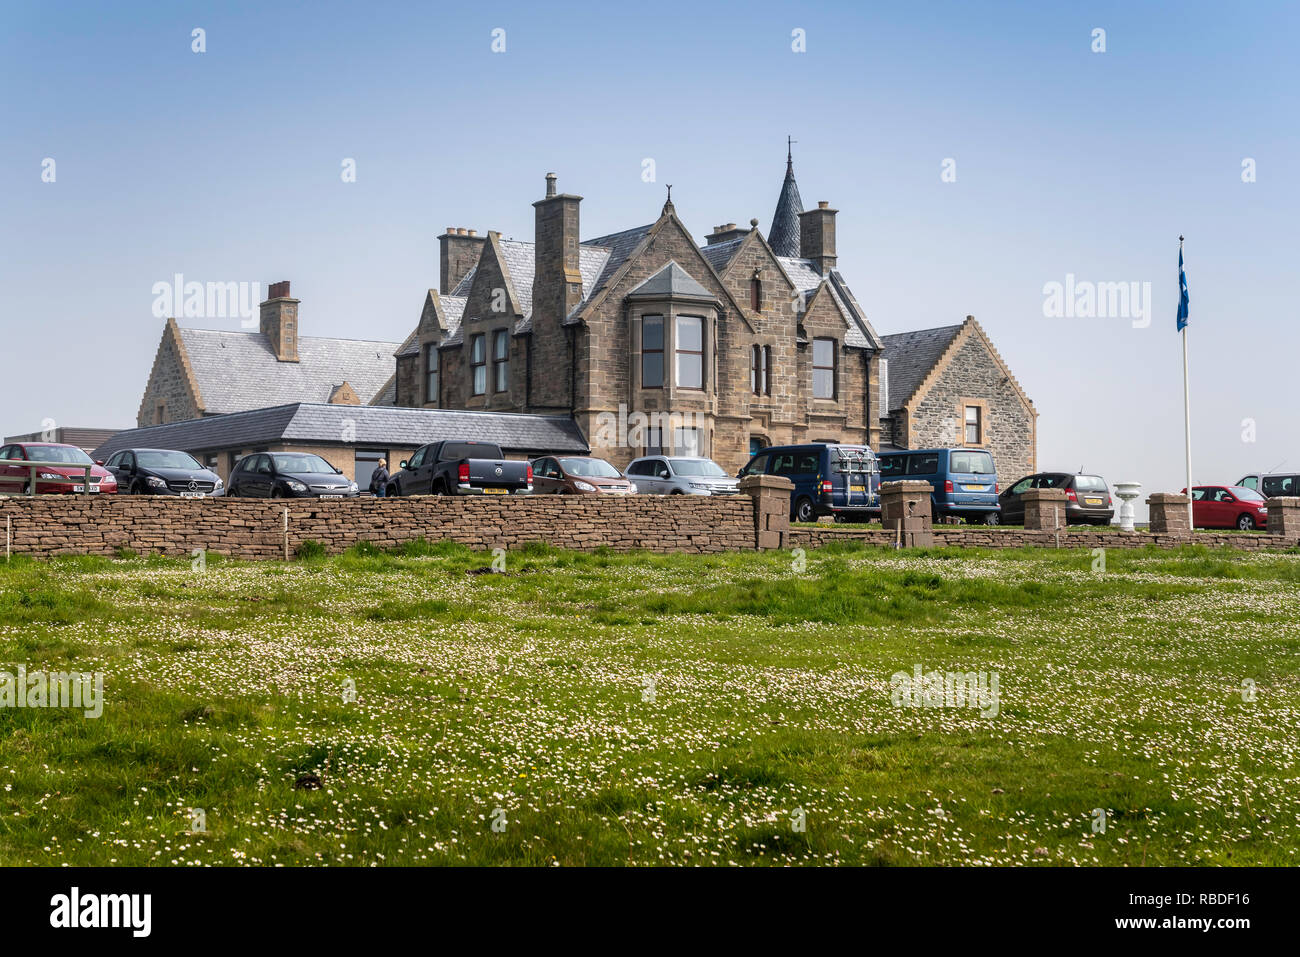 Die sumburgh Hotel in Sumburgh, Shetland Inseln, Deutschland, Europa. Stockfoto